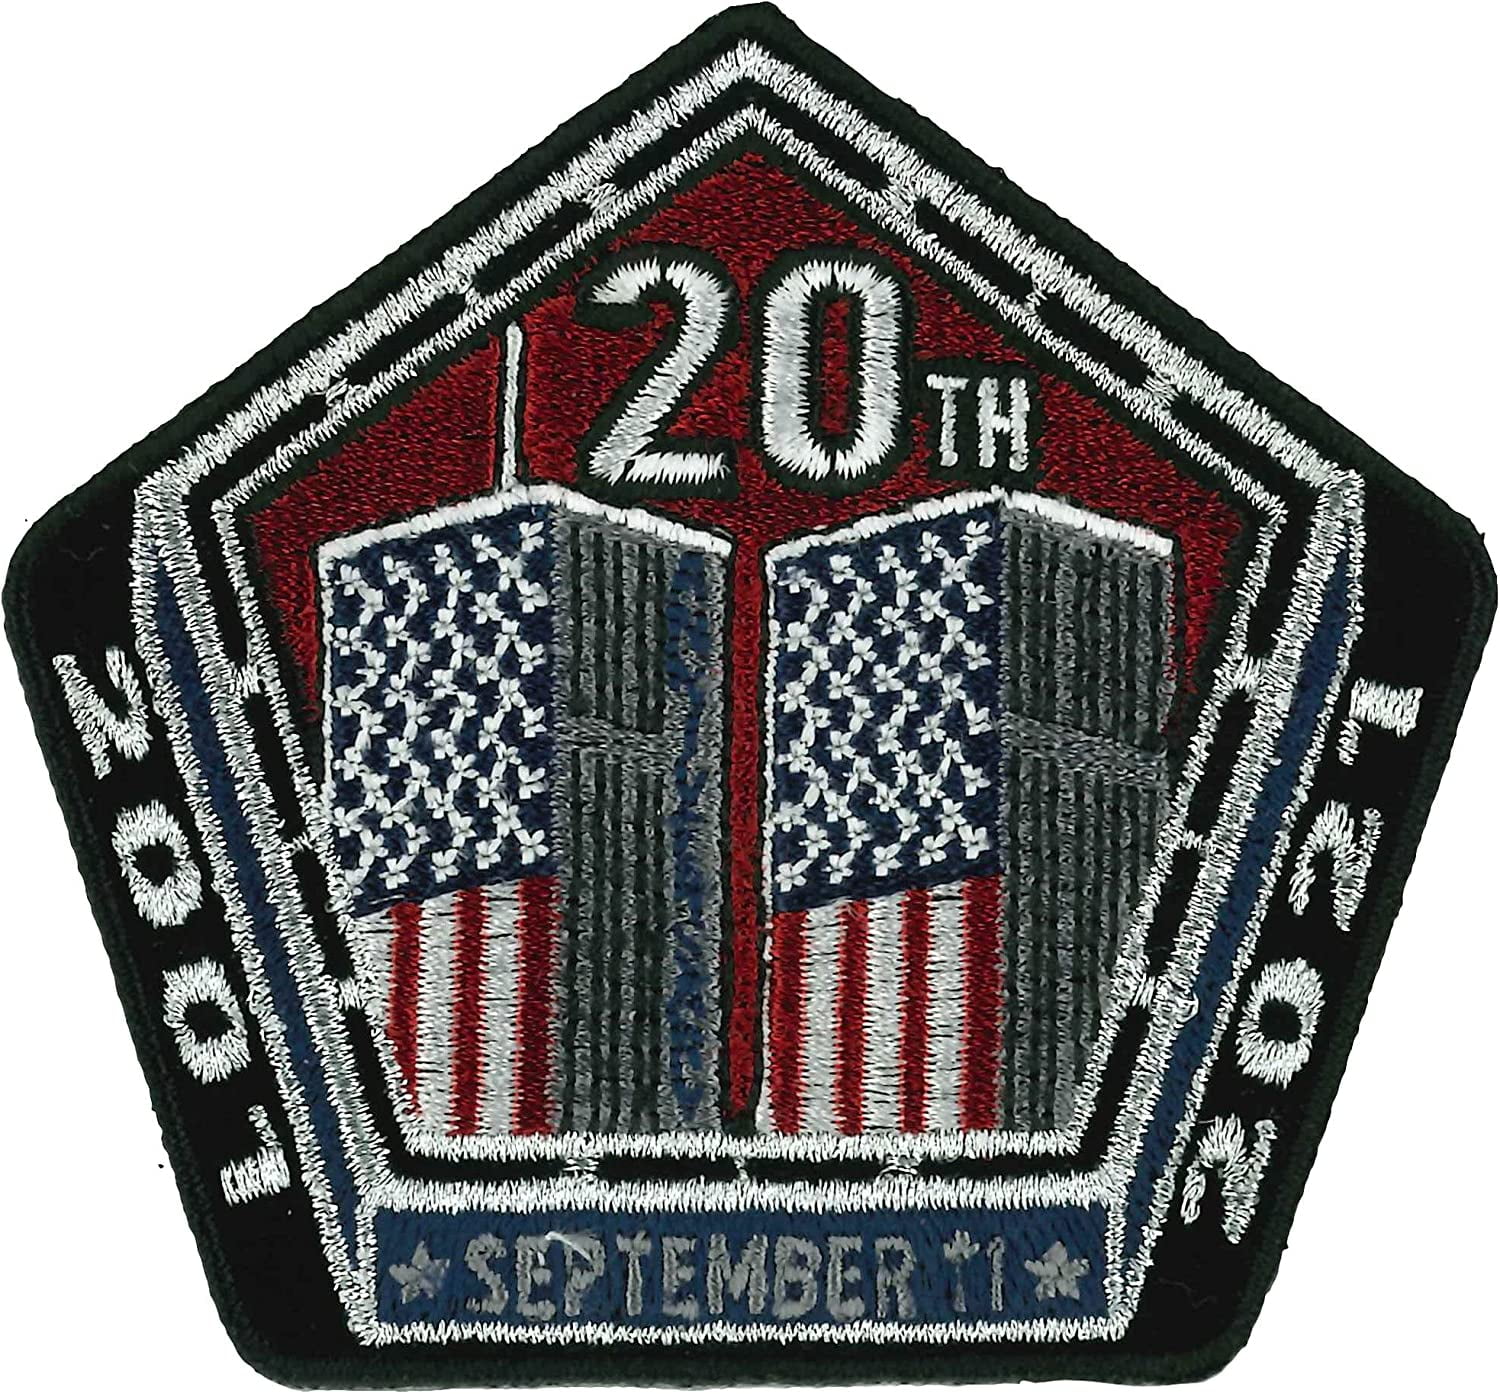 9/11 - 20th Anniversary 2001 - 2021 September 11 Pentagon & Towers